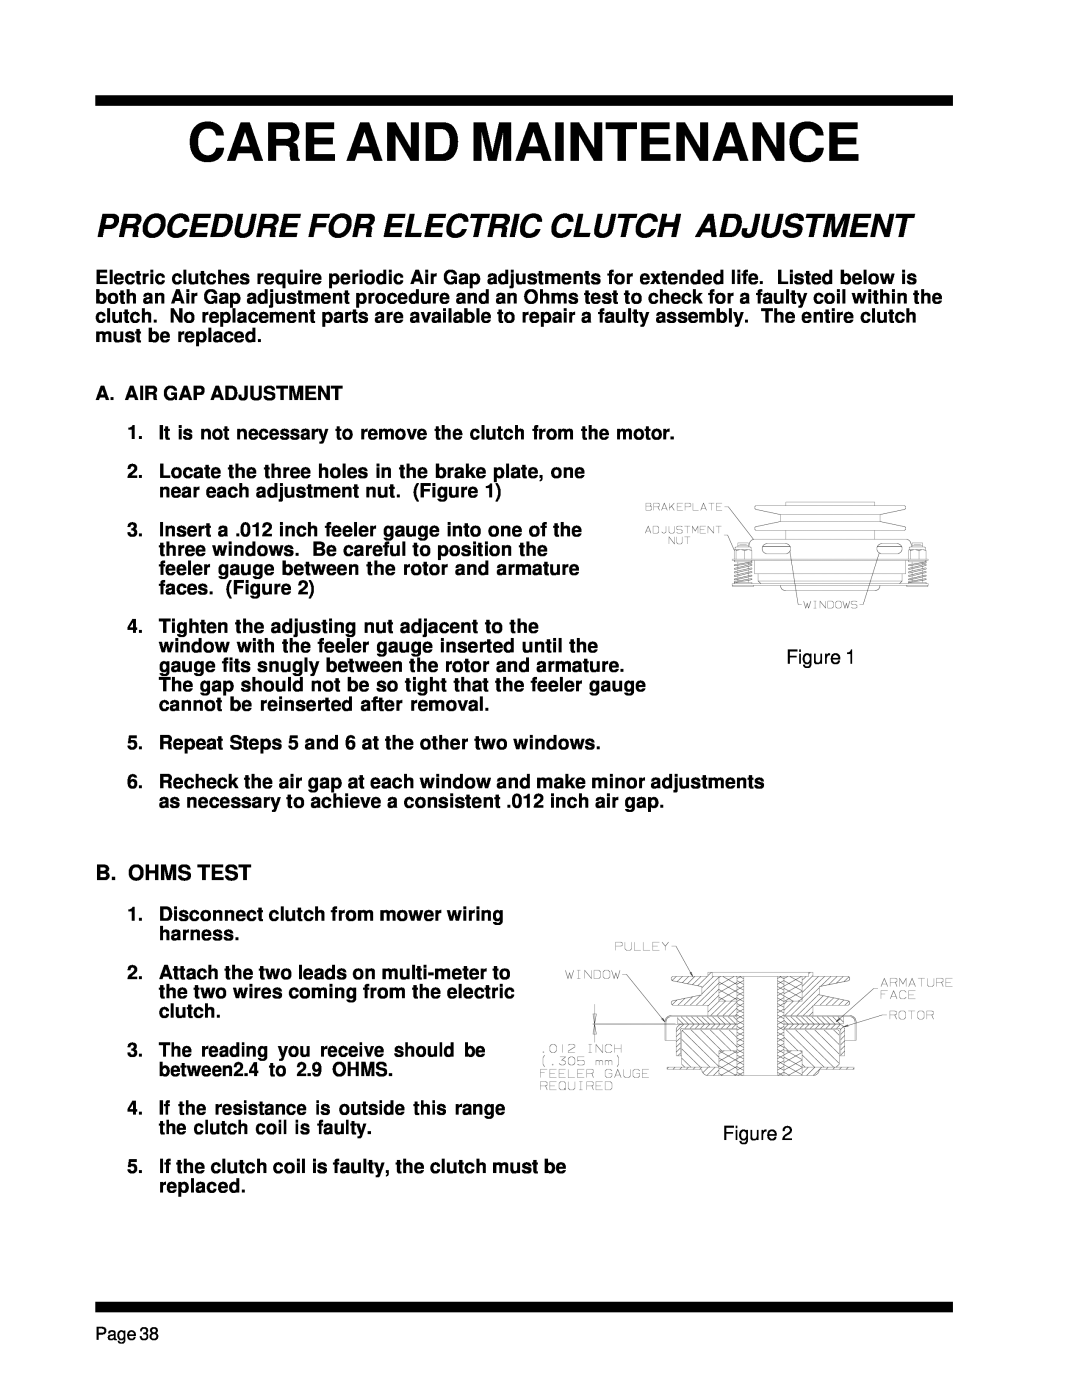 Dixon ZTR 5023, ZTR 5425 manual Procedure For Electric Clutch Adjustment, Care And Maintenance, B. Ohms Test 